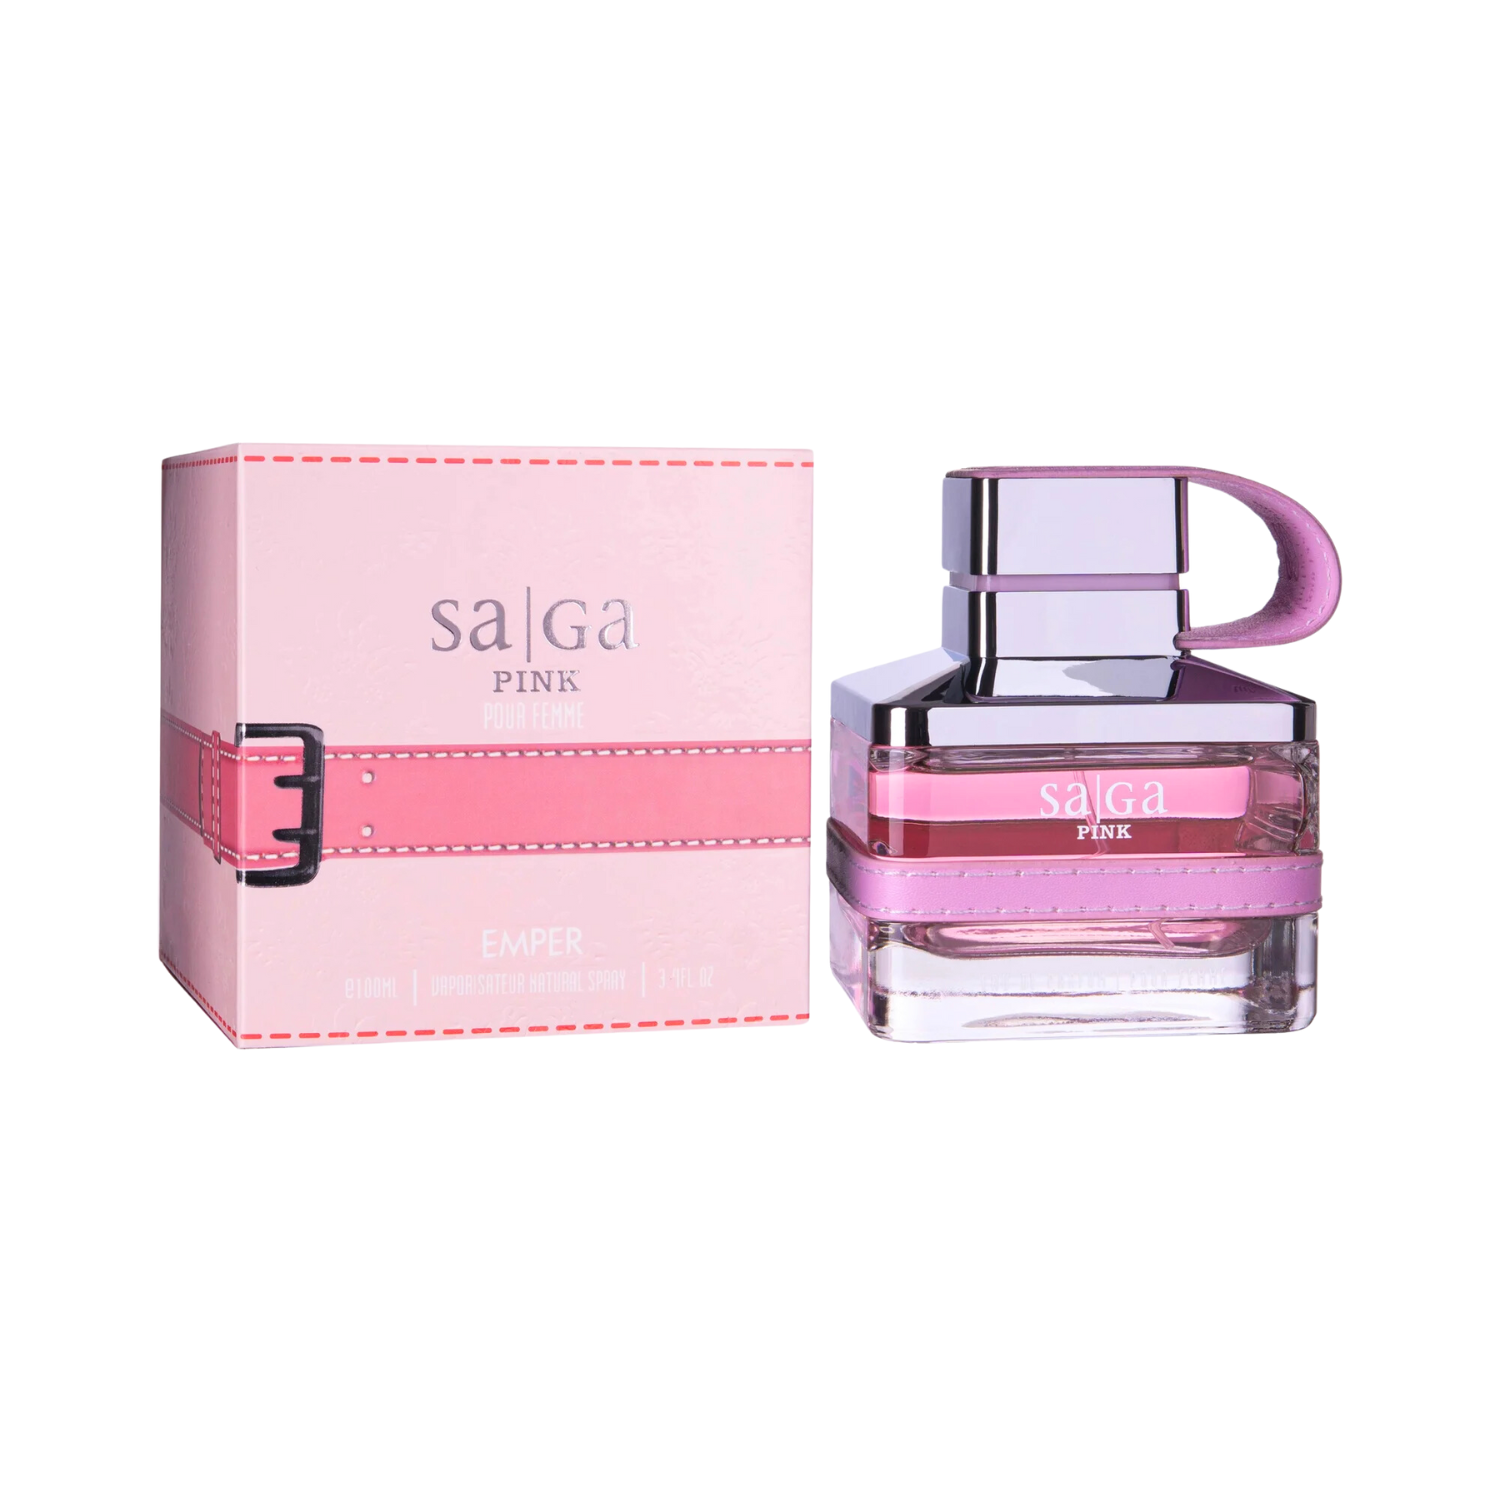 emper-saga-pink-edp-perfume-for-women-100ml